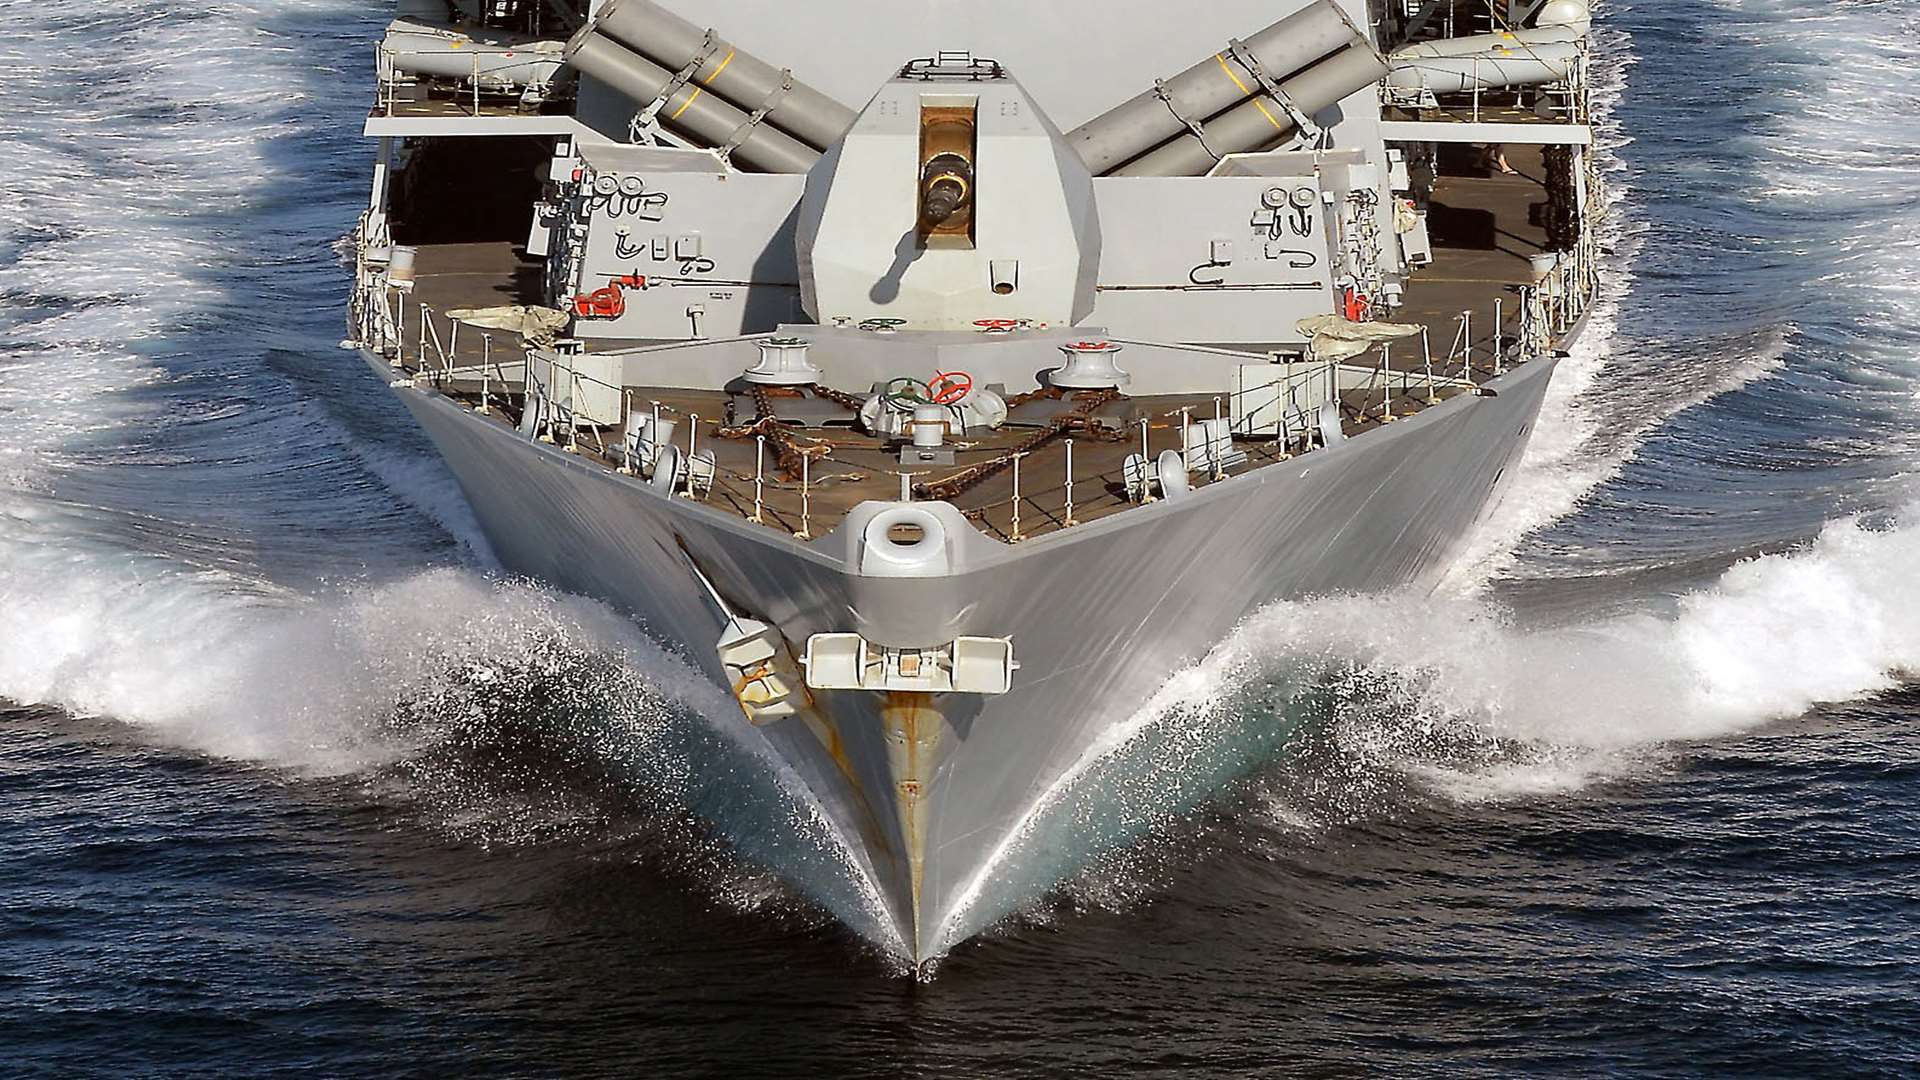 Royal Navy warship HMS Kent intercepted the sub. Library image.